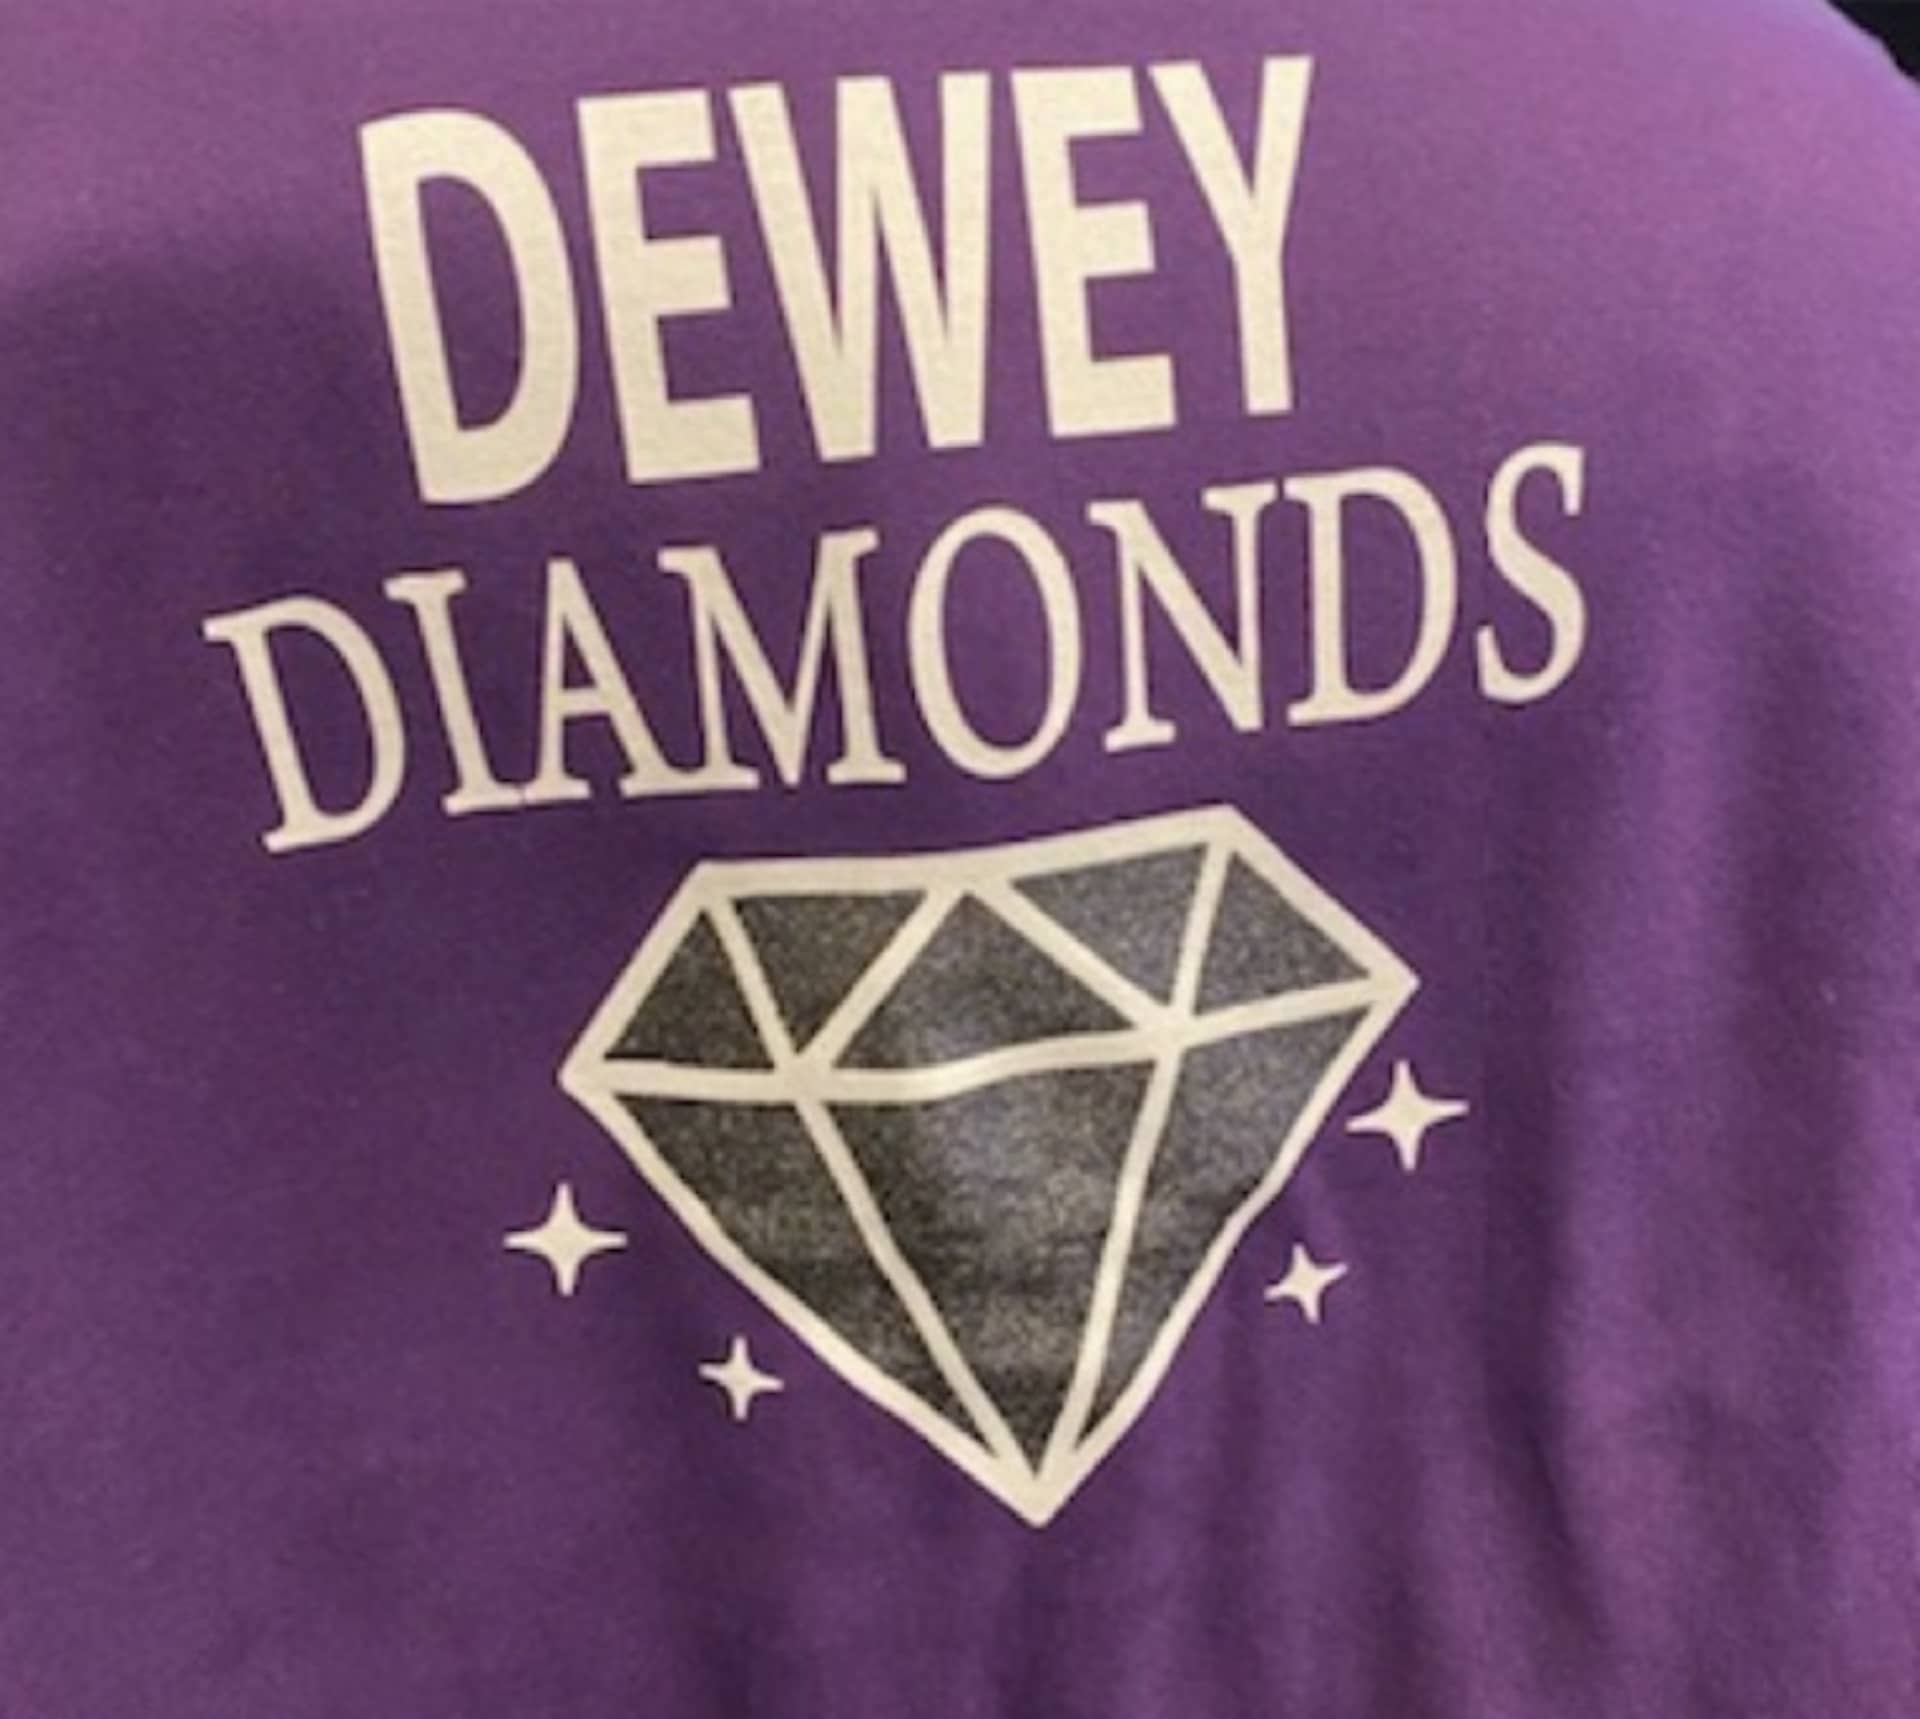 A shirt with Dewey Diamonds written on it